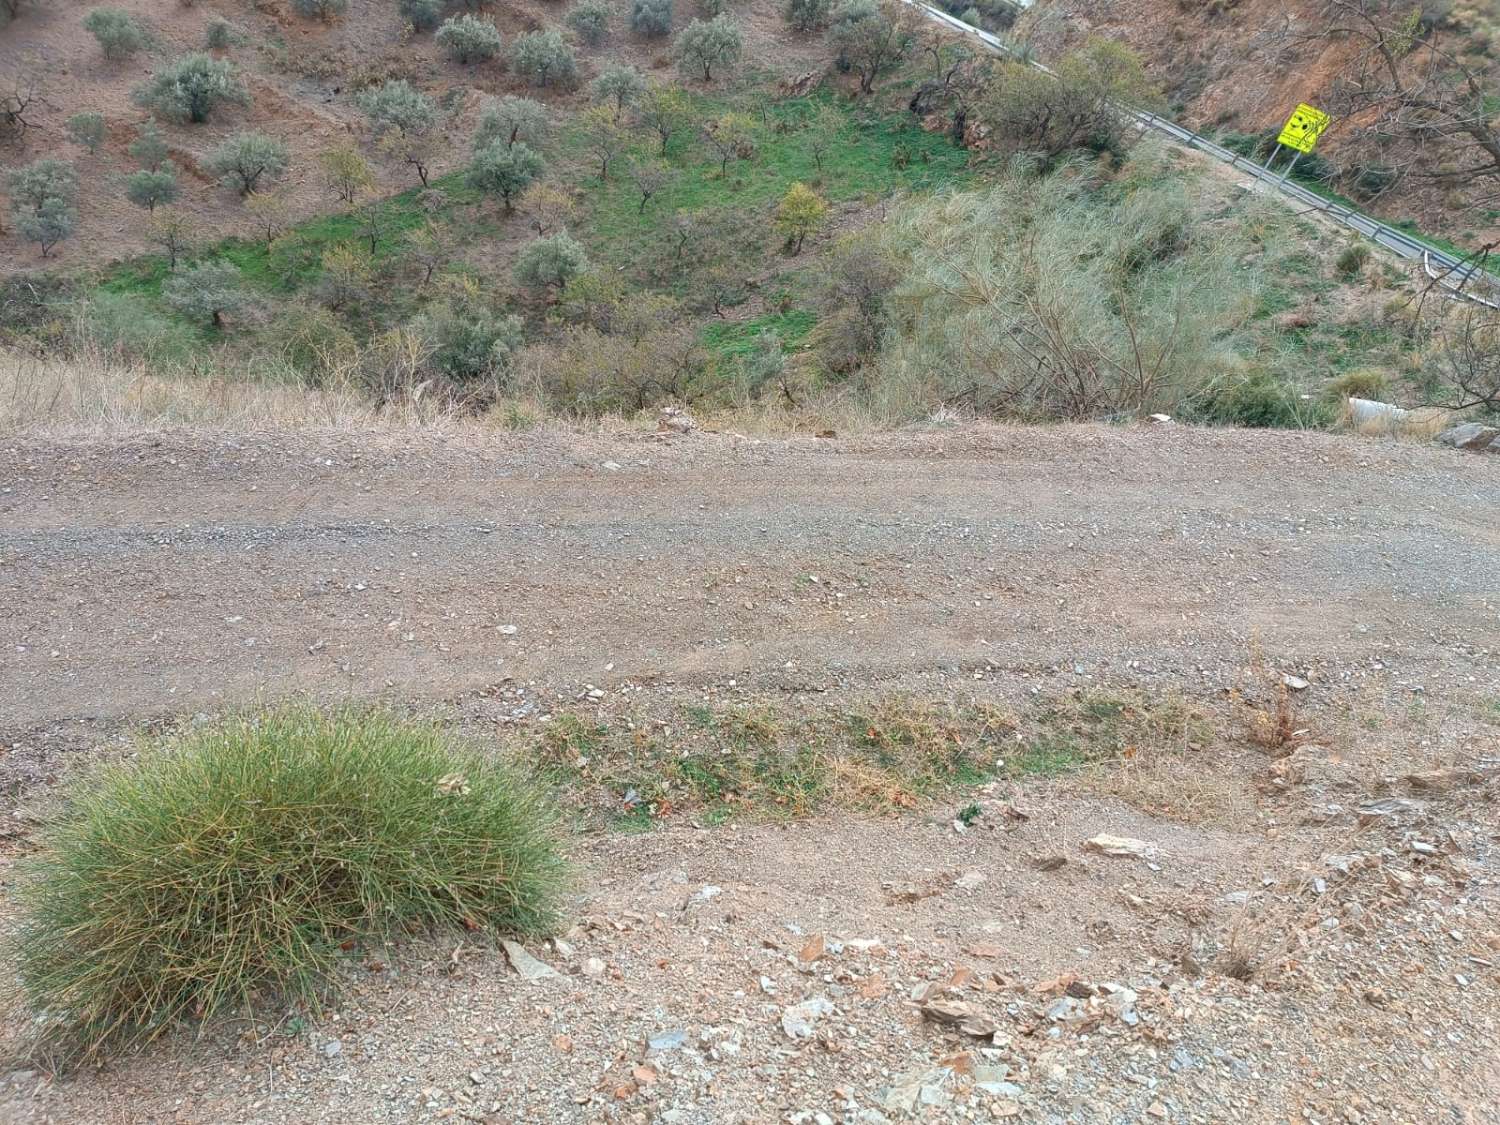 Plot in Moclinejo (Los Palmas) next to the road